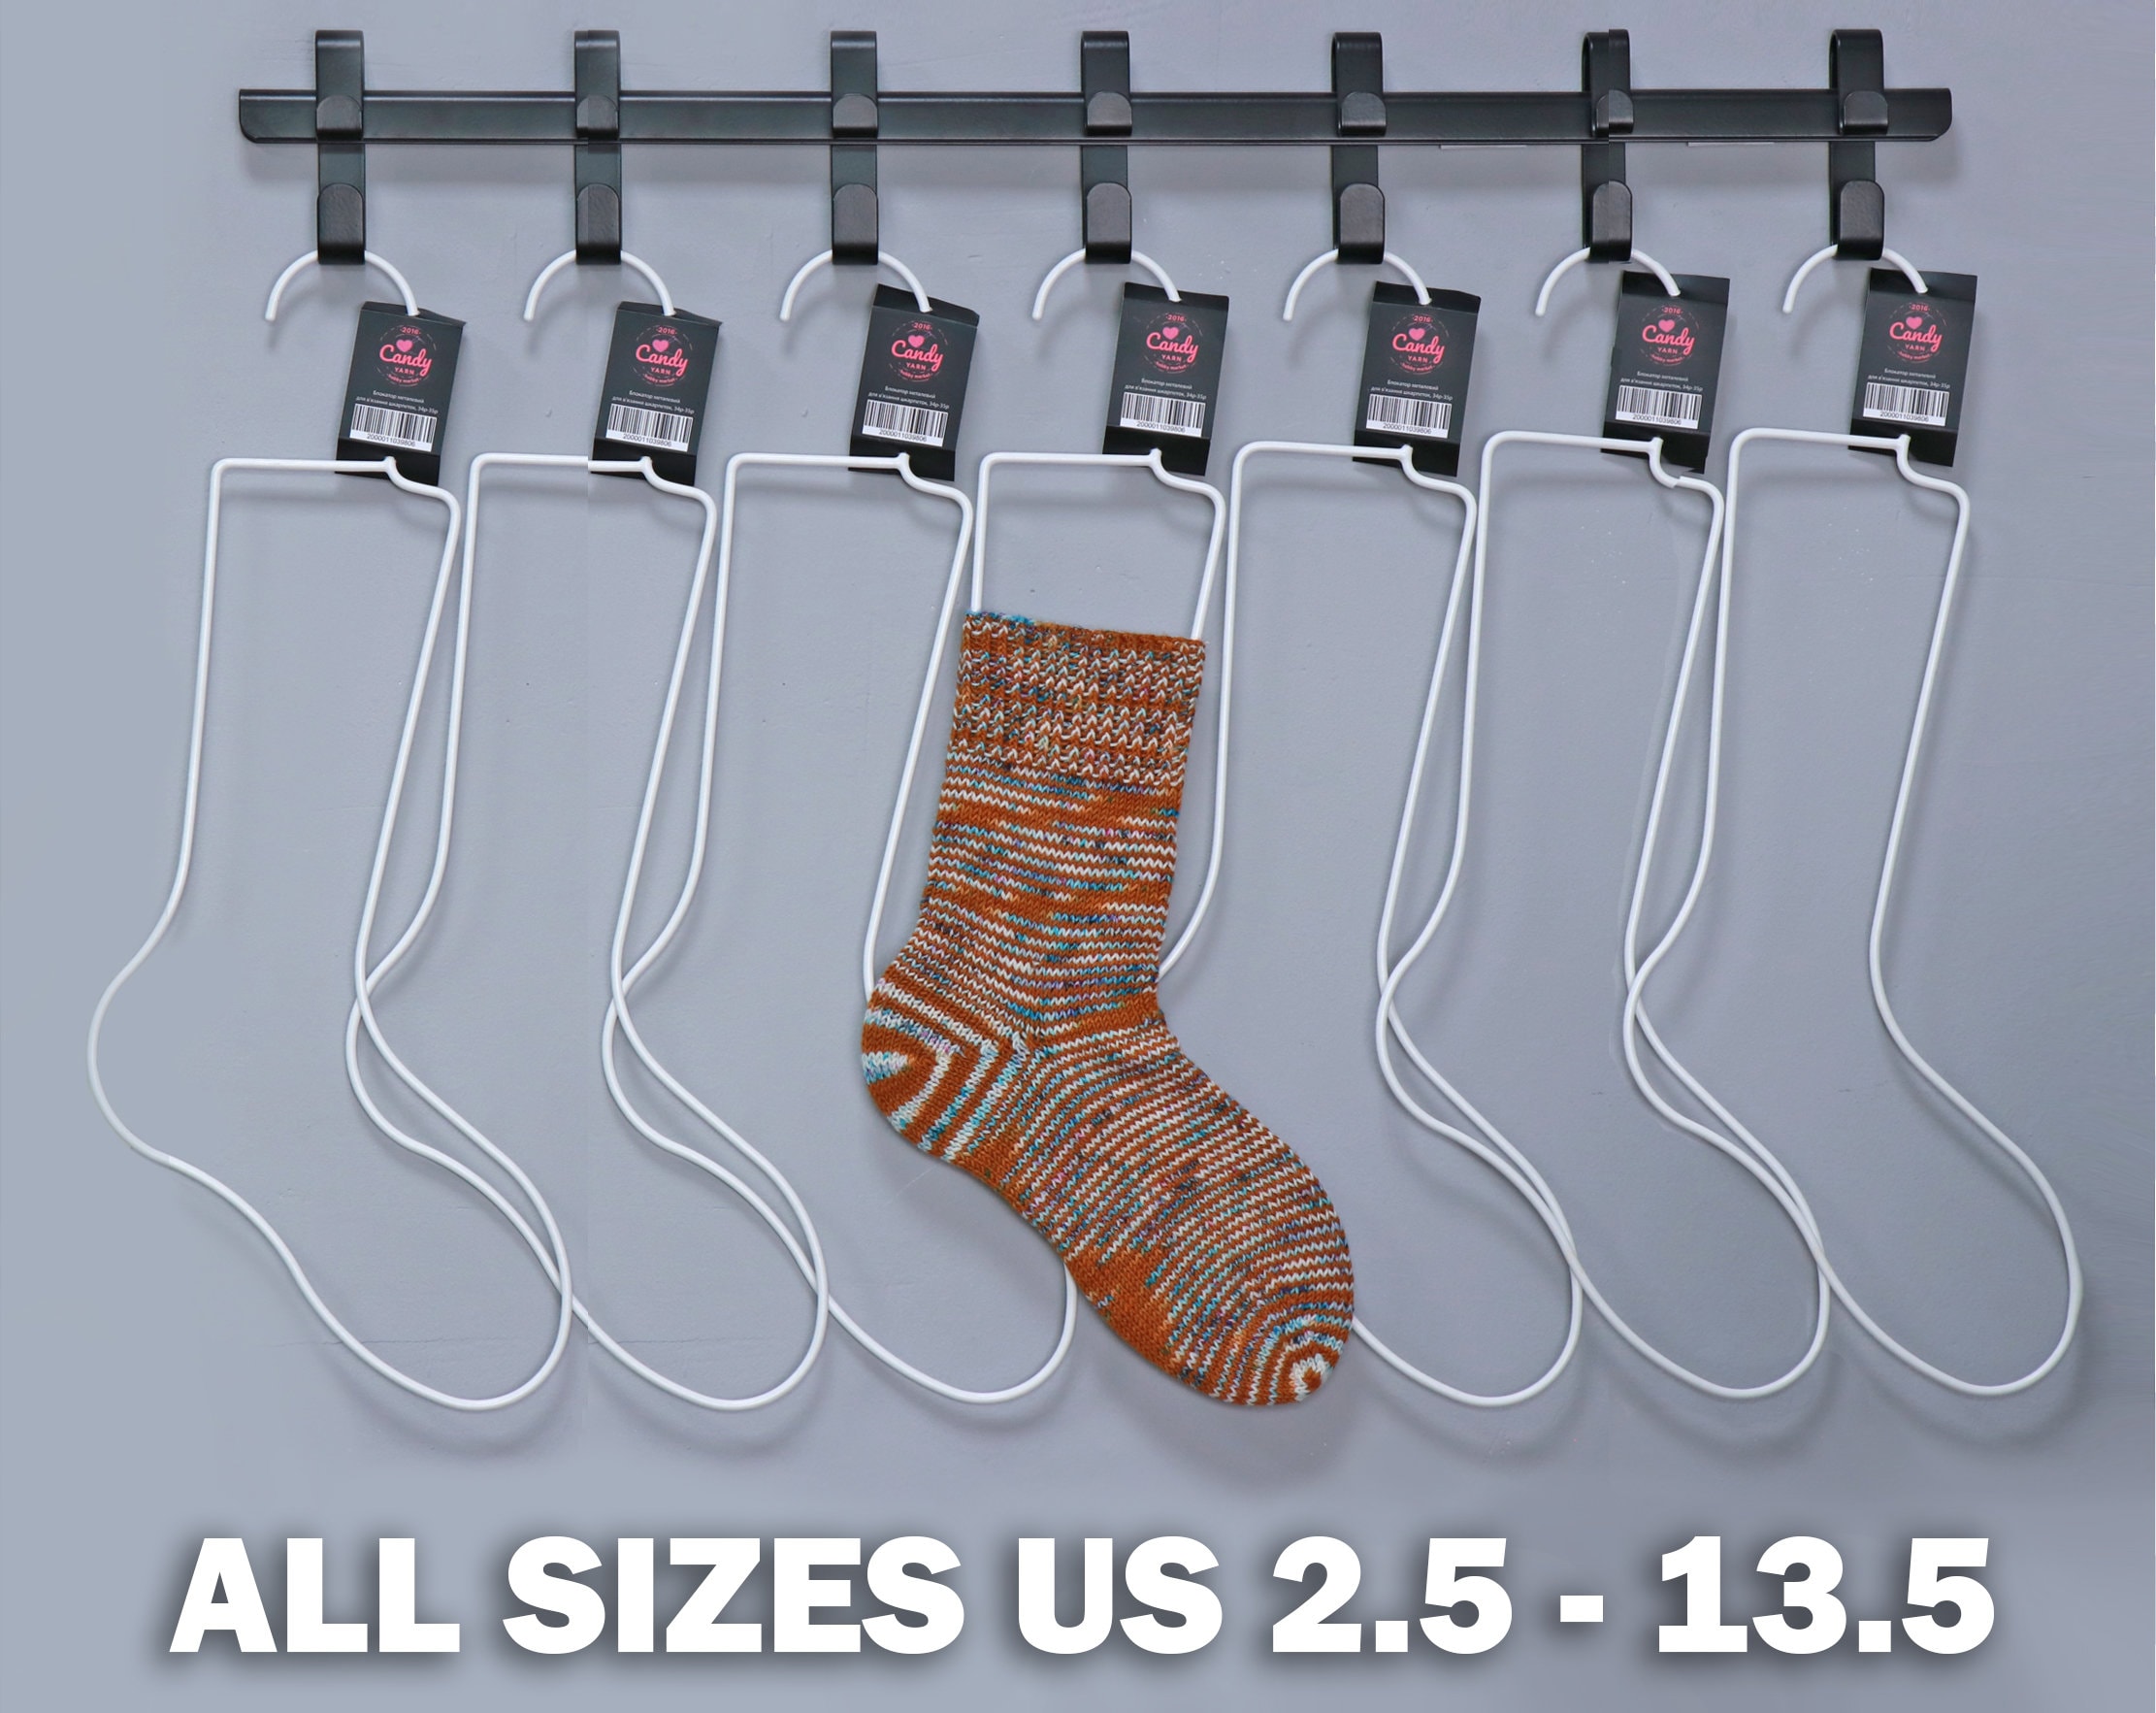 Red Suricata Adjustable Size Sock Blockers - Pair of Socking Stretcher